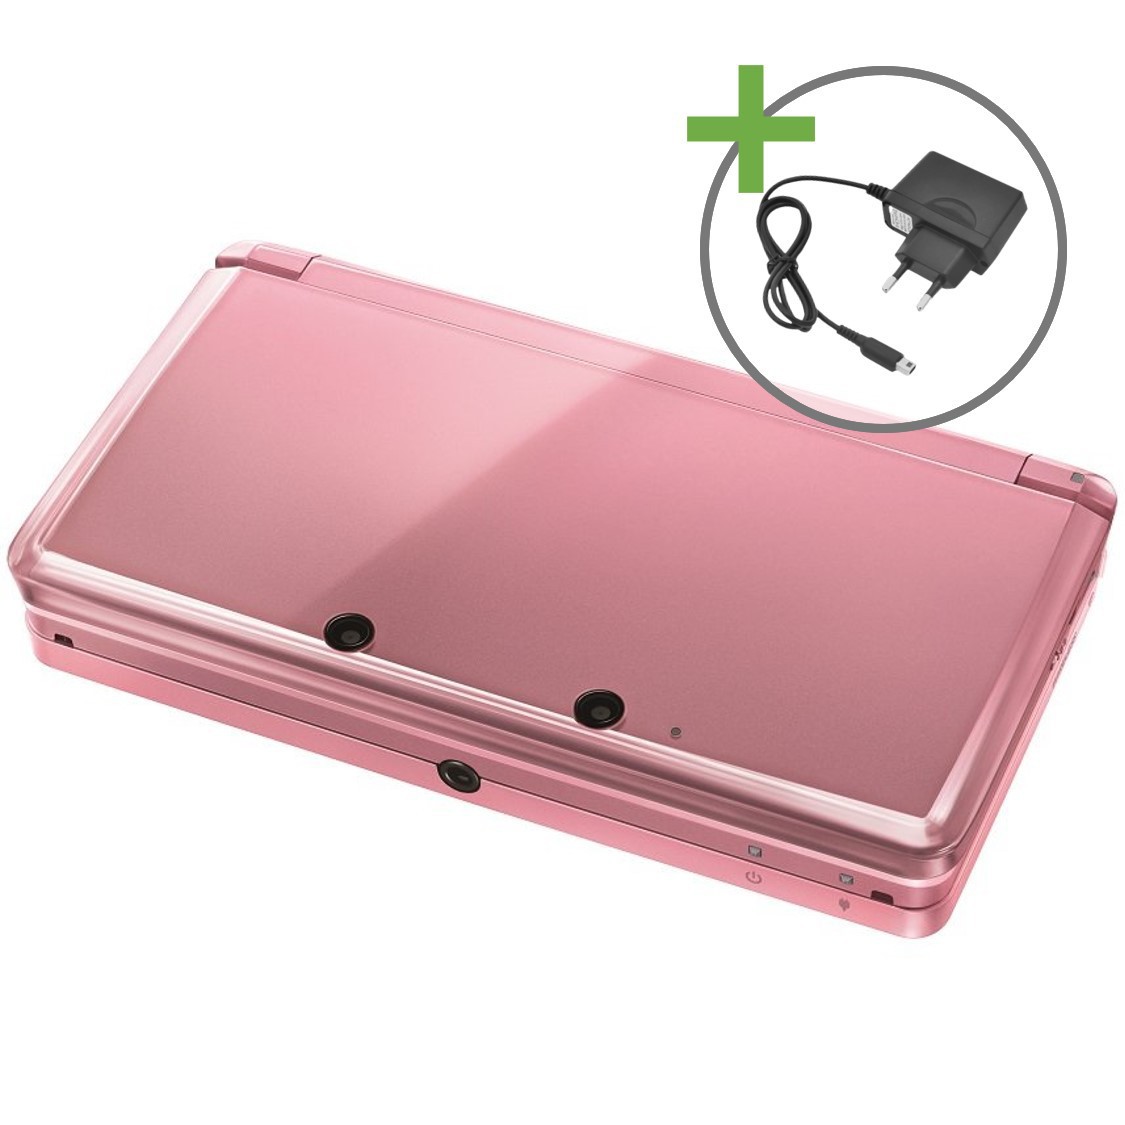 Nintendo 3DS - Coral Pink [Complete] - Nintendo 3DS Hardware - 3